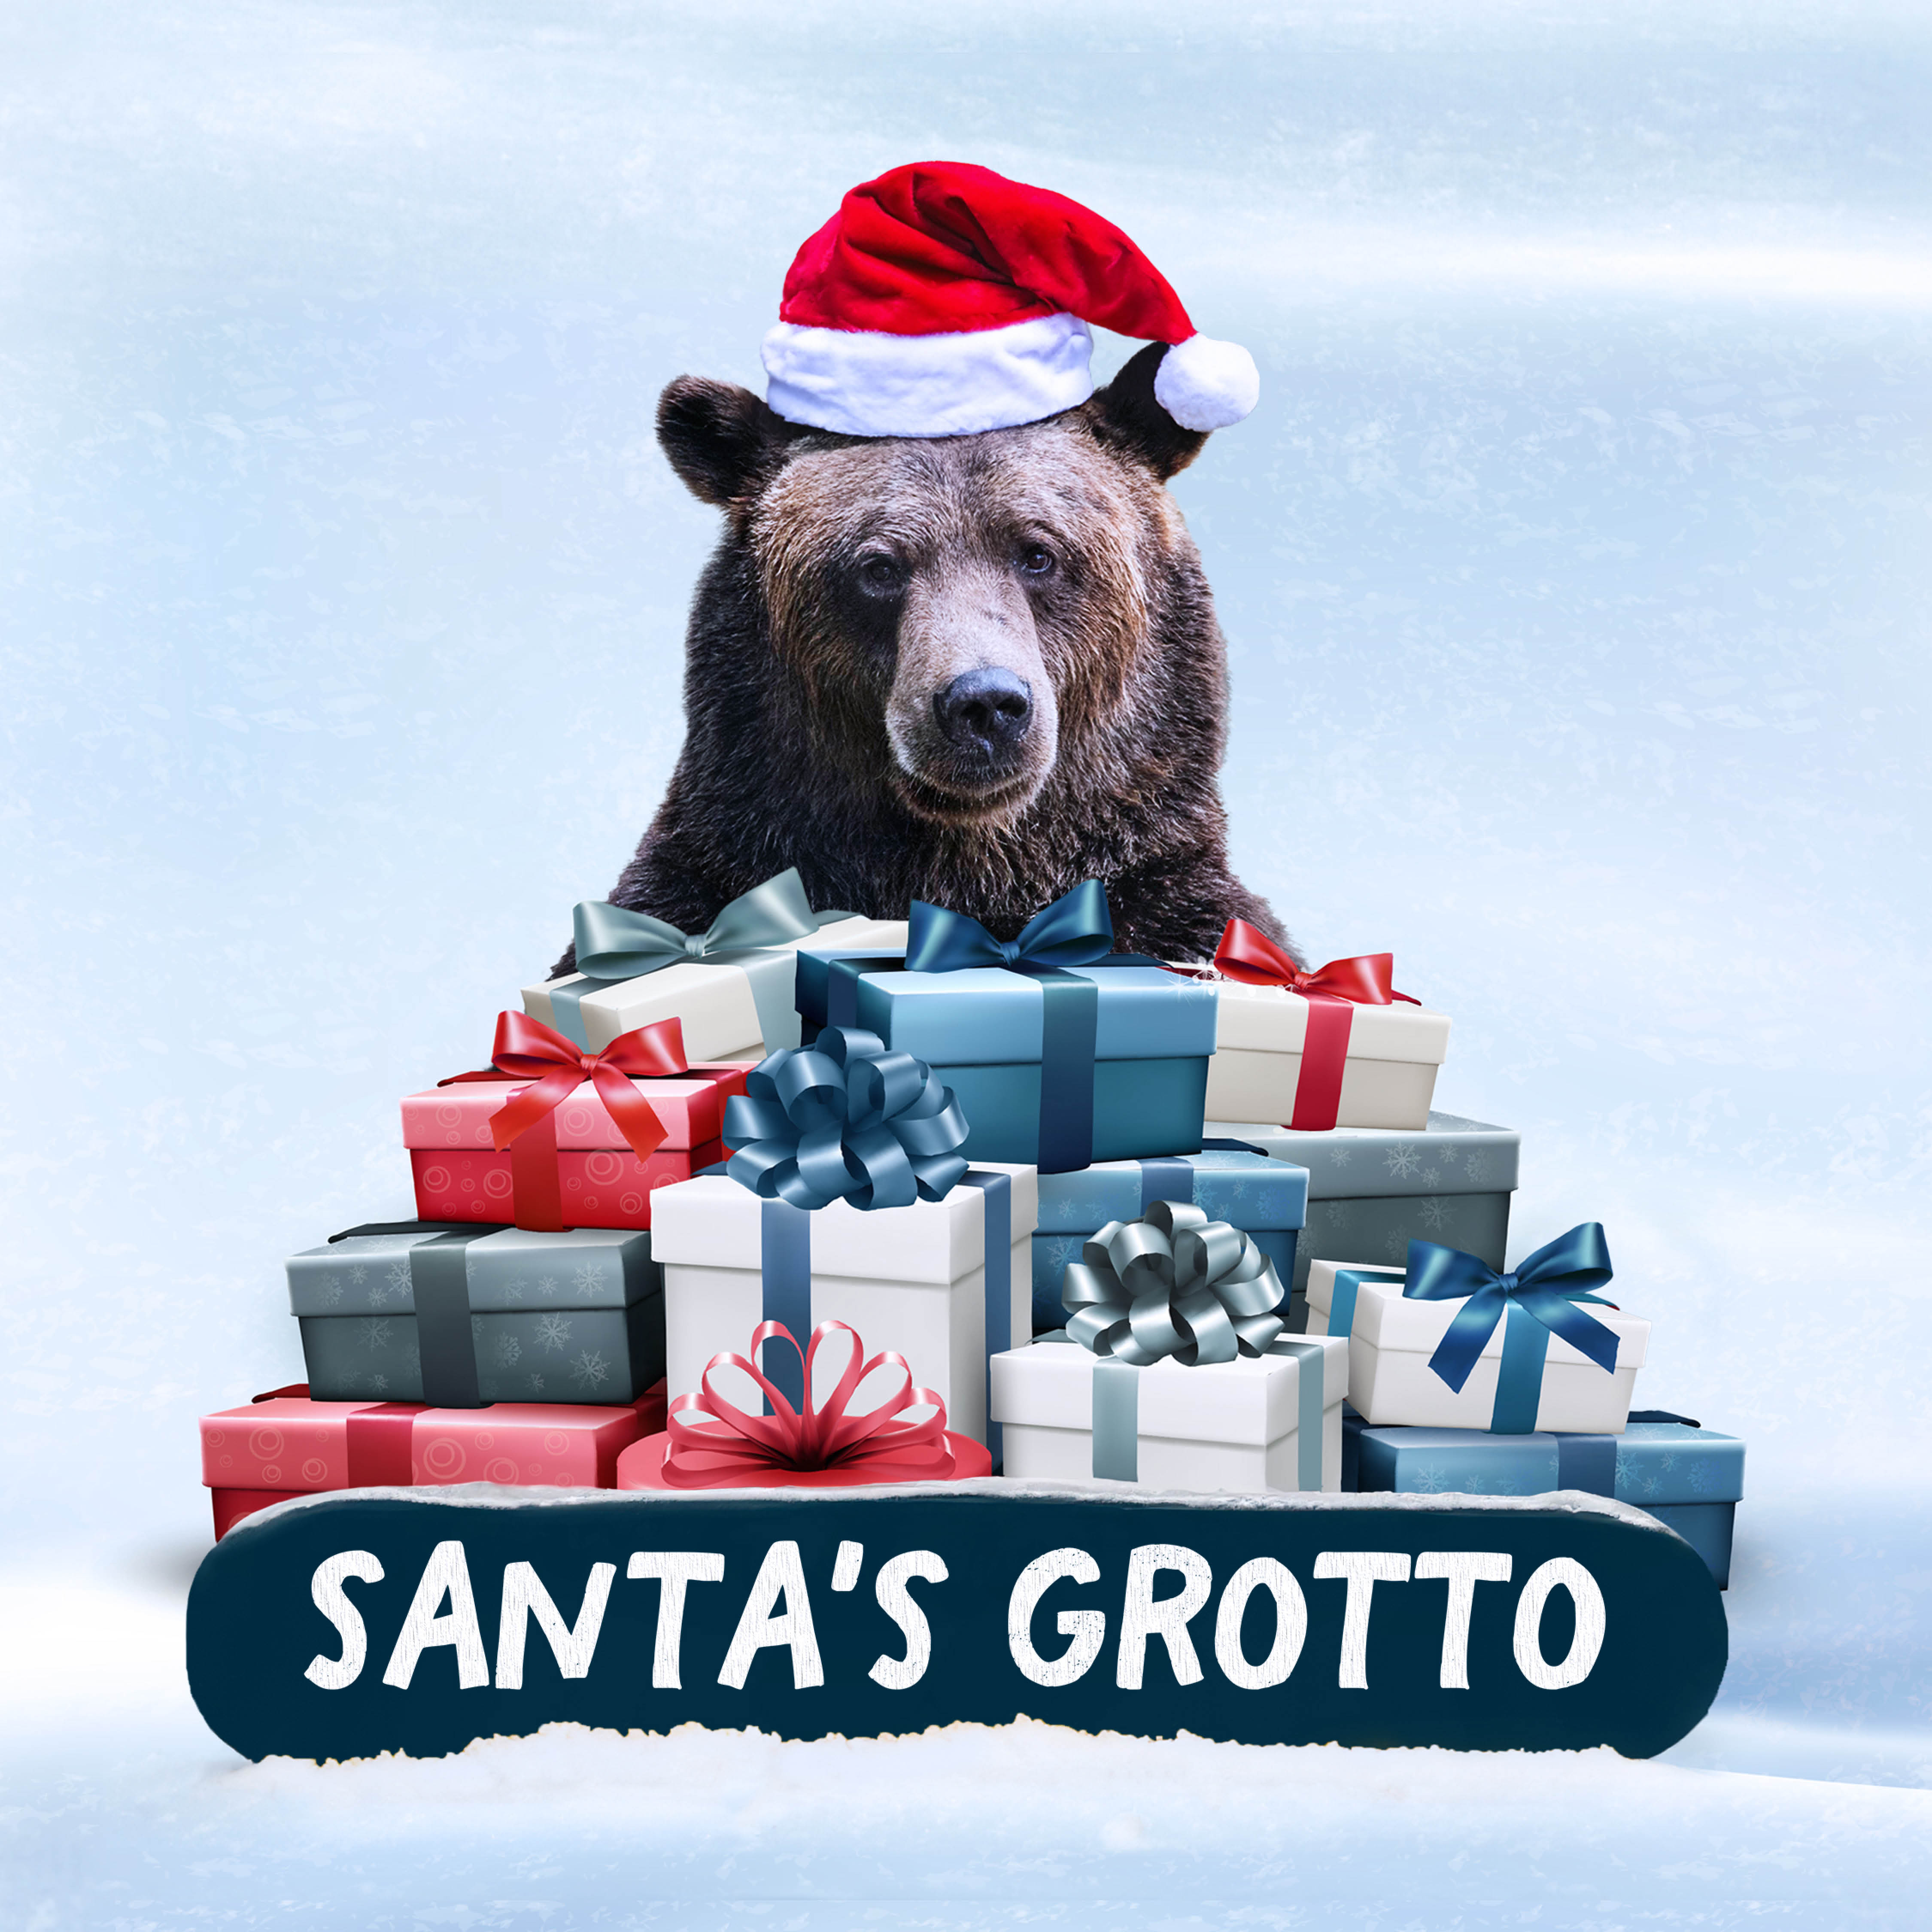 Santa's Grotto - festive bear overlooking presents on snowy background